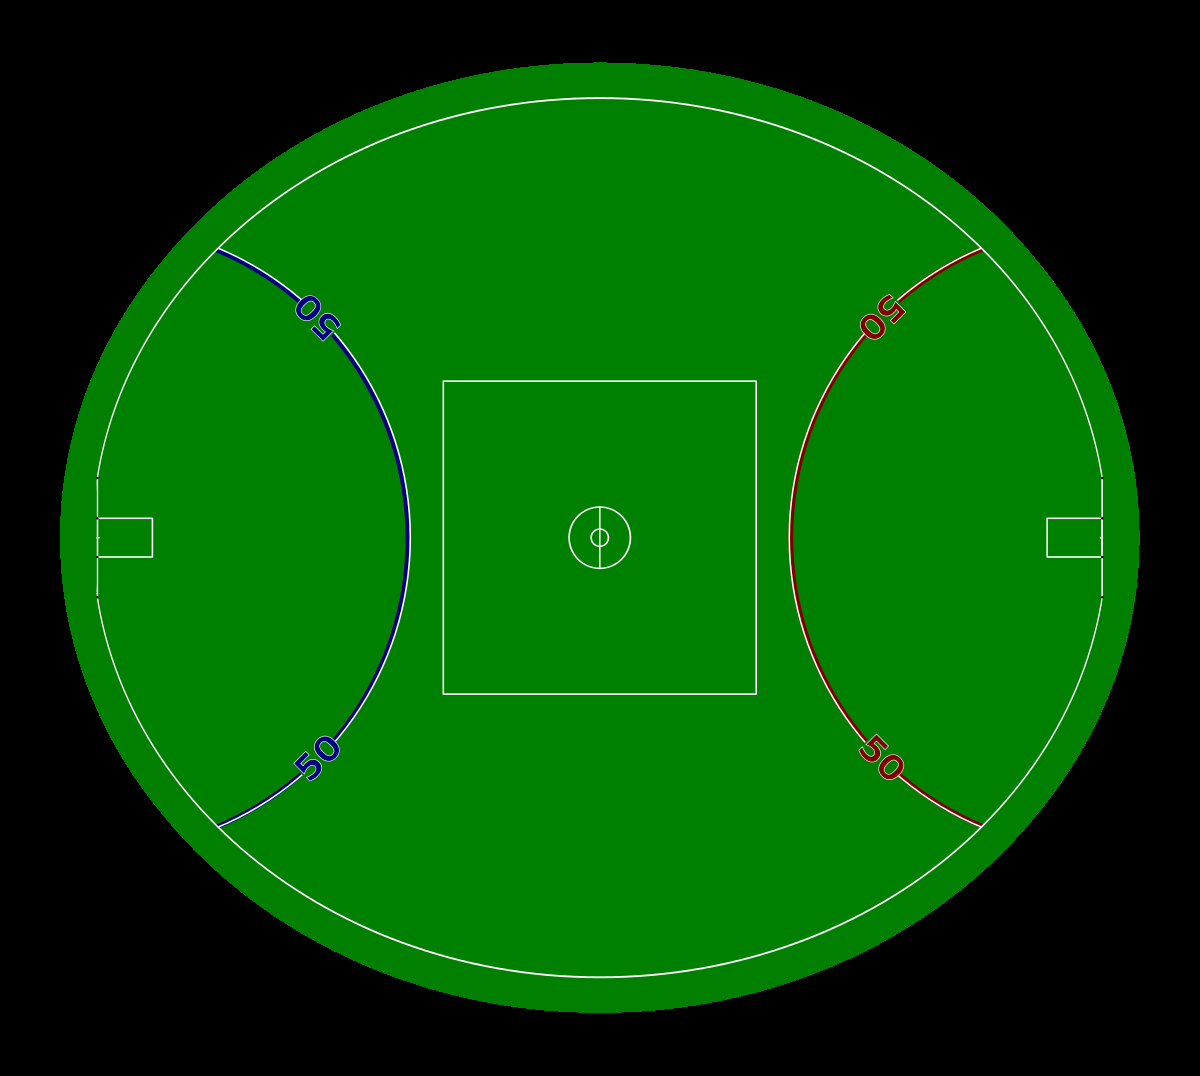 Football Field Diagram Australian Rules Football Playing Field Wikipedia